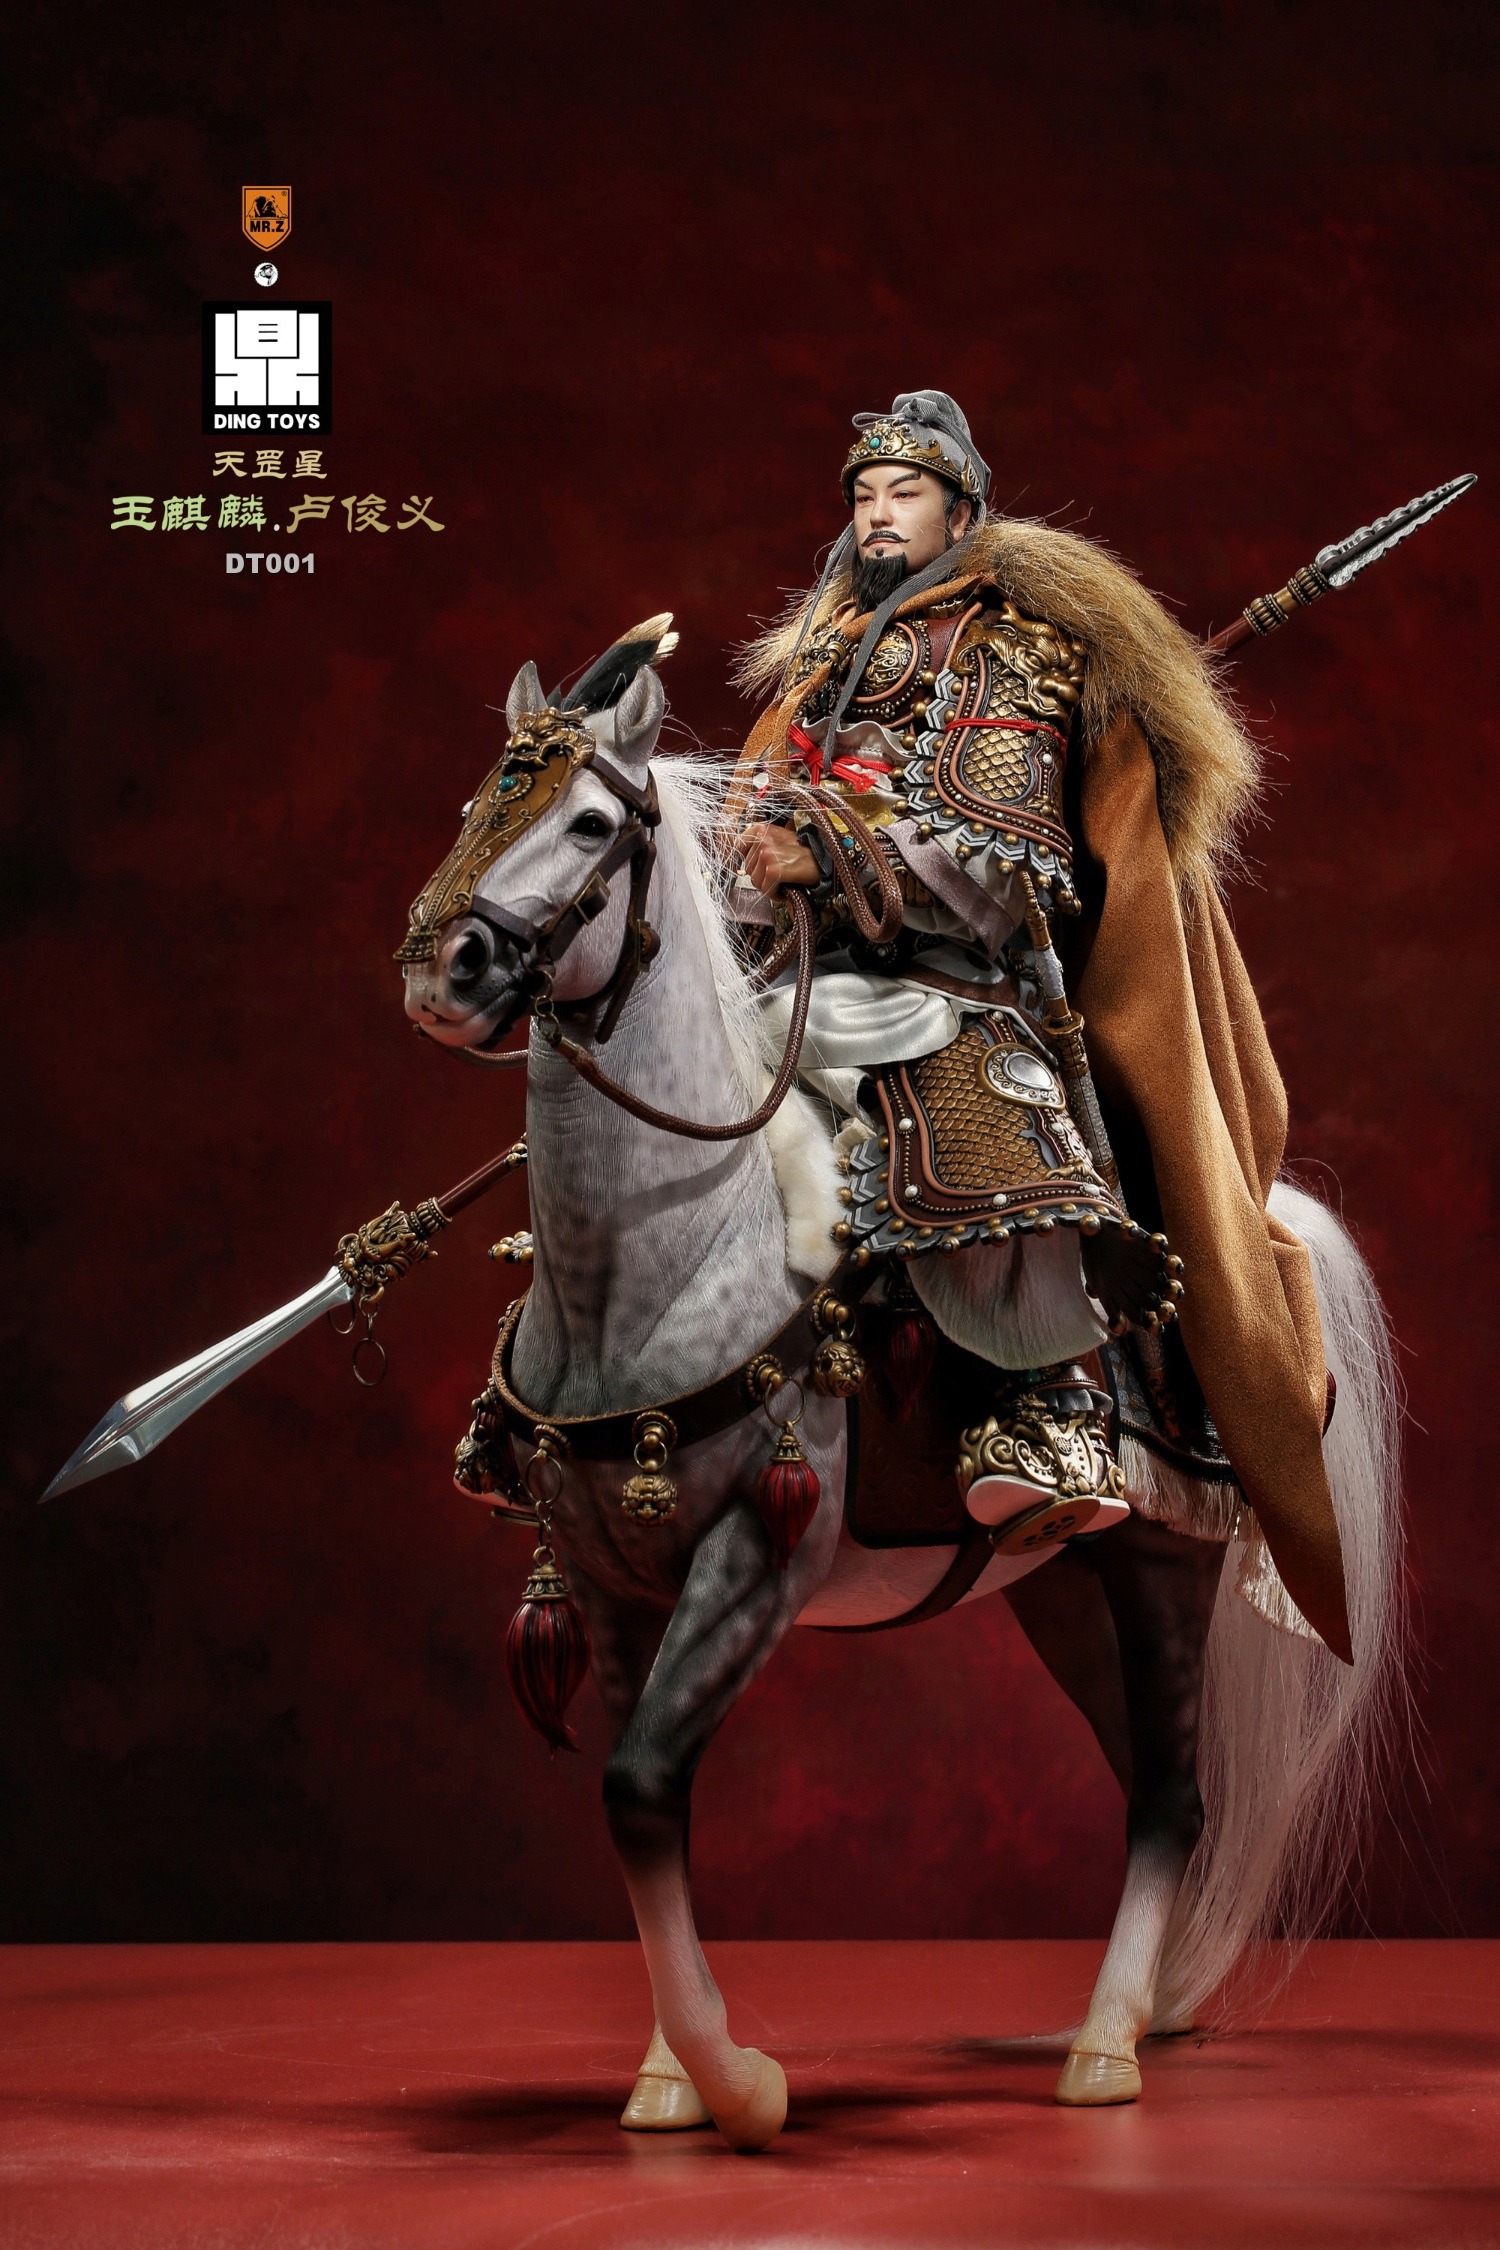 MrZ - NEW PRODUCT: Mr.Z X DING TOYS - Tiangang Star Jade Qilin-Lu Junyi / war horse Qilin beast #DT001 0266